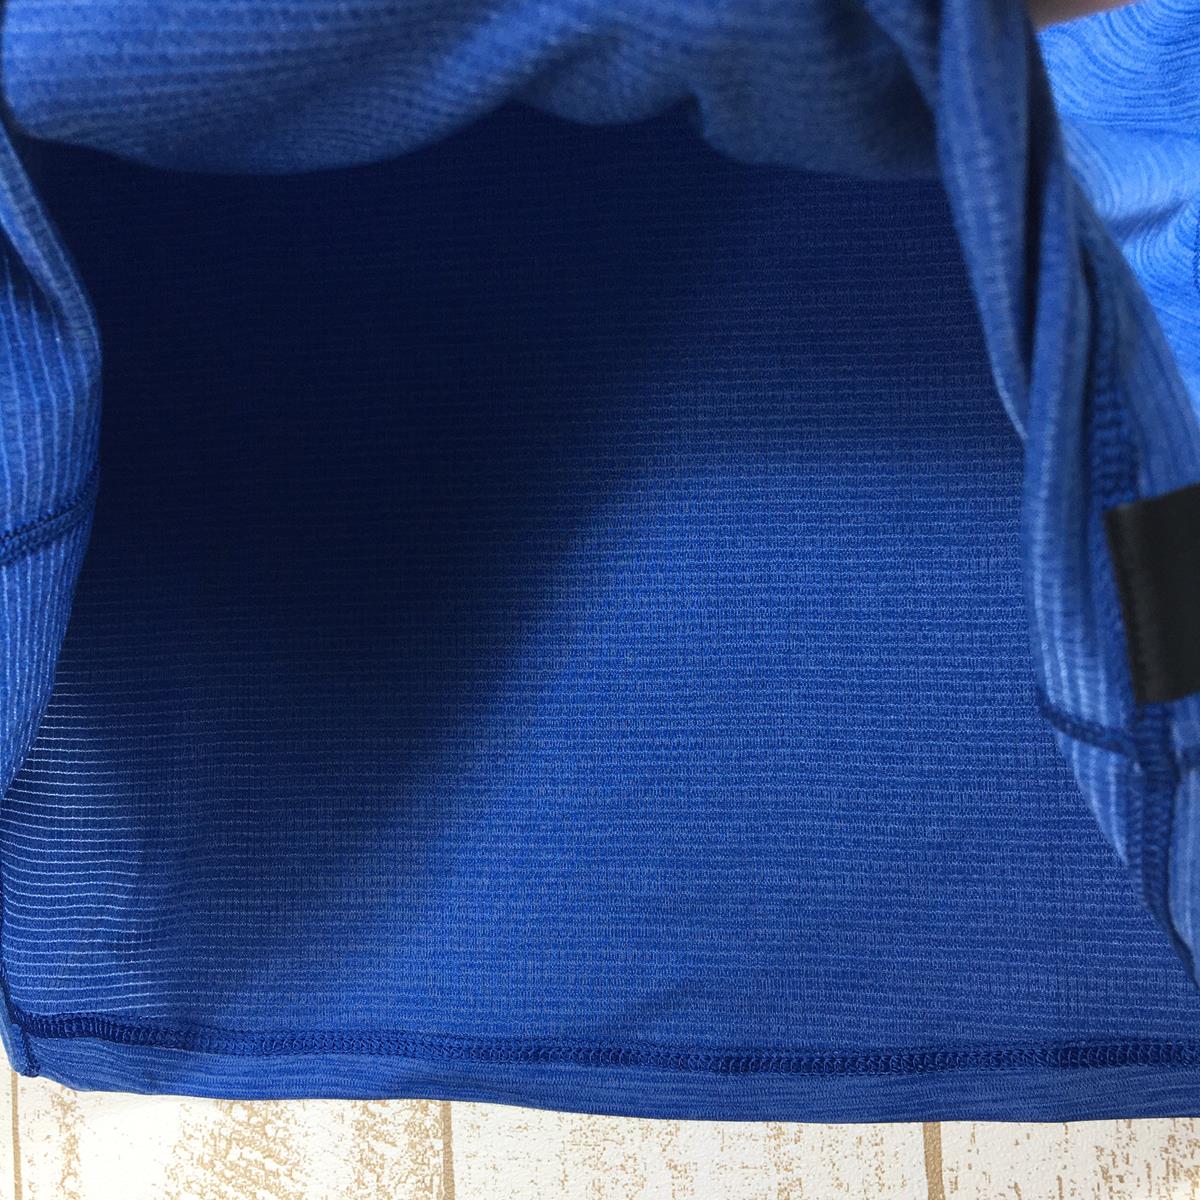 【MEN's XS】 パタゴニア ロングスリーブ キャプリーン クール ライトウェイト シャツ CAP Cool Lightweight Shirt PATAGONIA 45690 SUPX Superior Blue X-Dye ブルー系